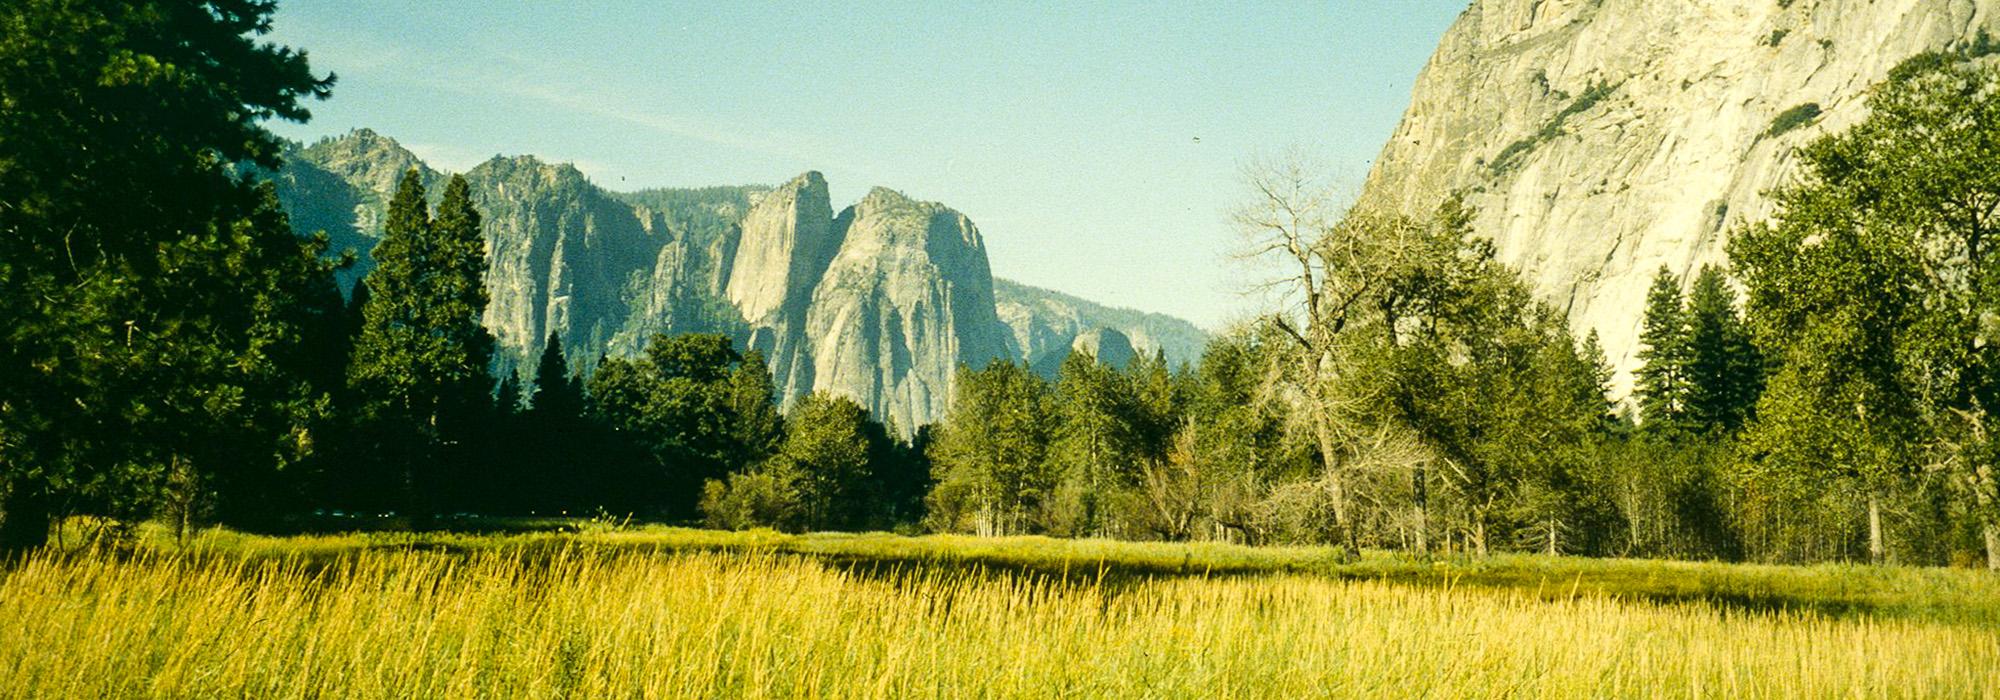 Yosemite Village, Yosemite National Park, CA